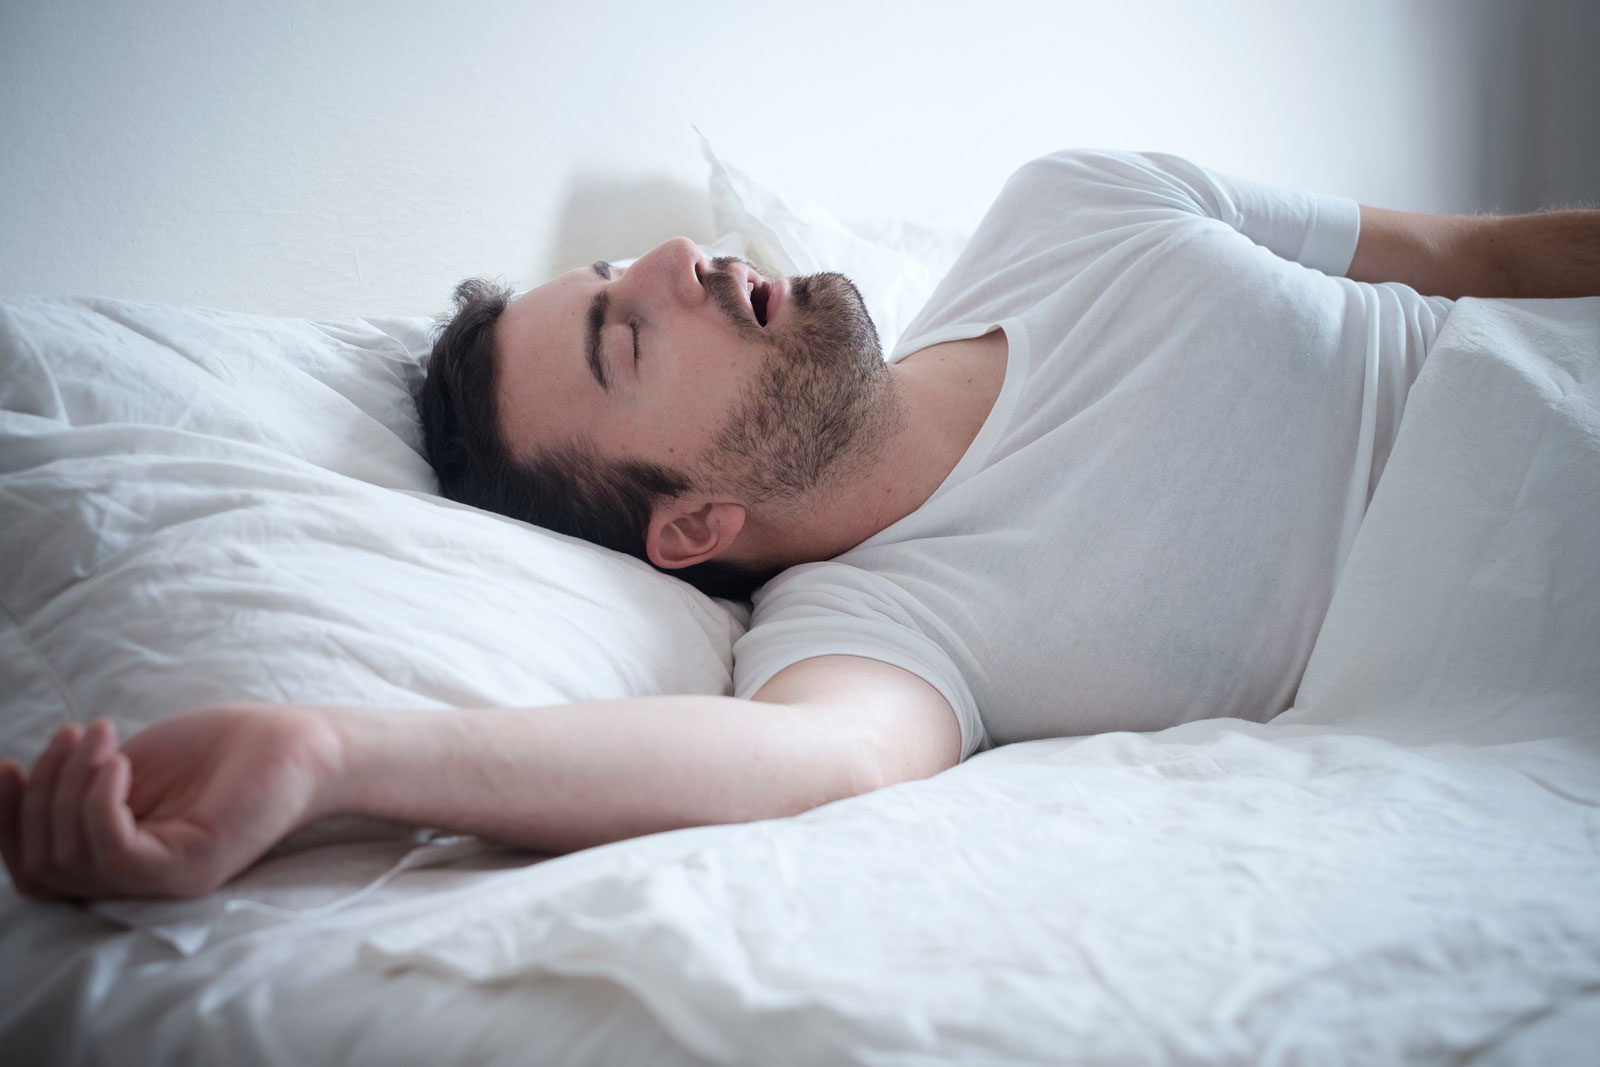 Does Snoring Equal Sleep Apnea?